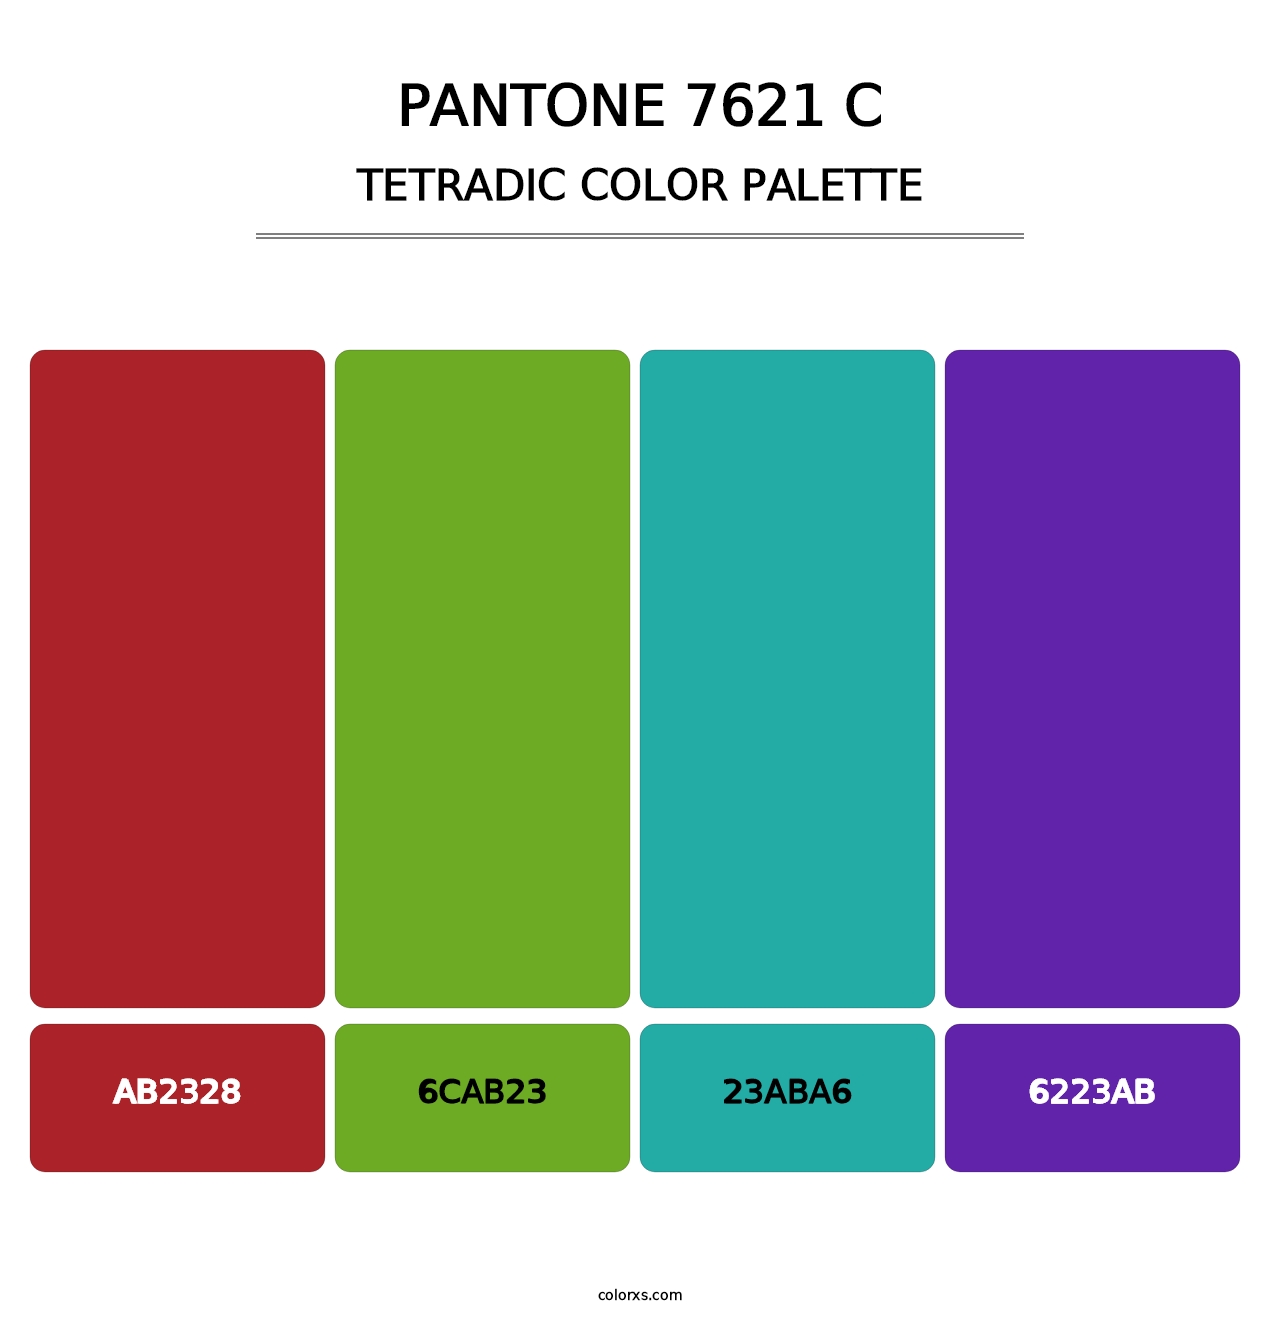 PANTONE 7621 C - Tetradic Color Palette